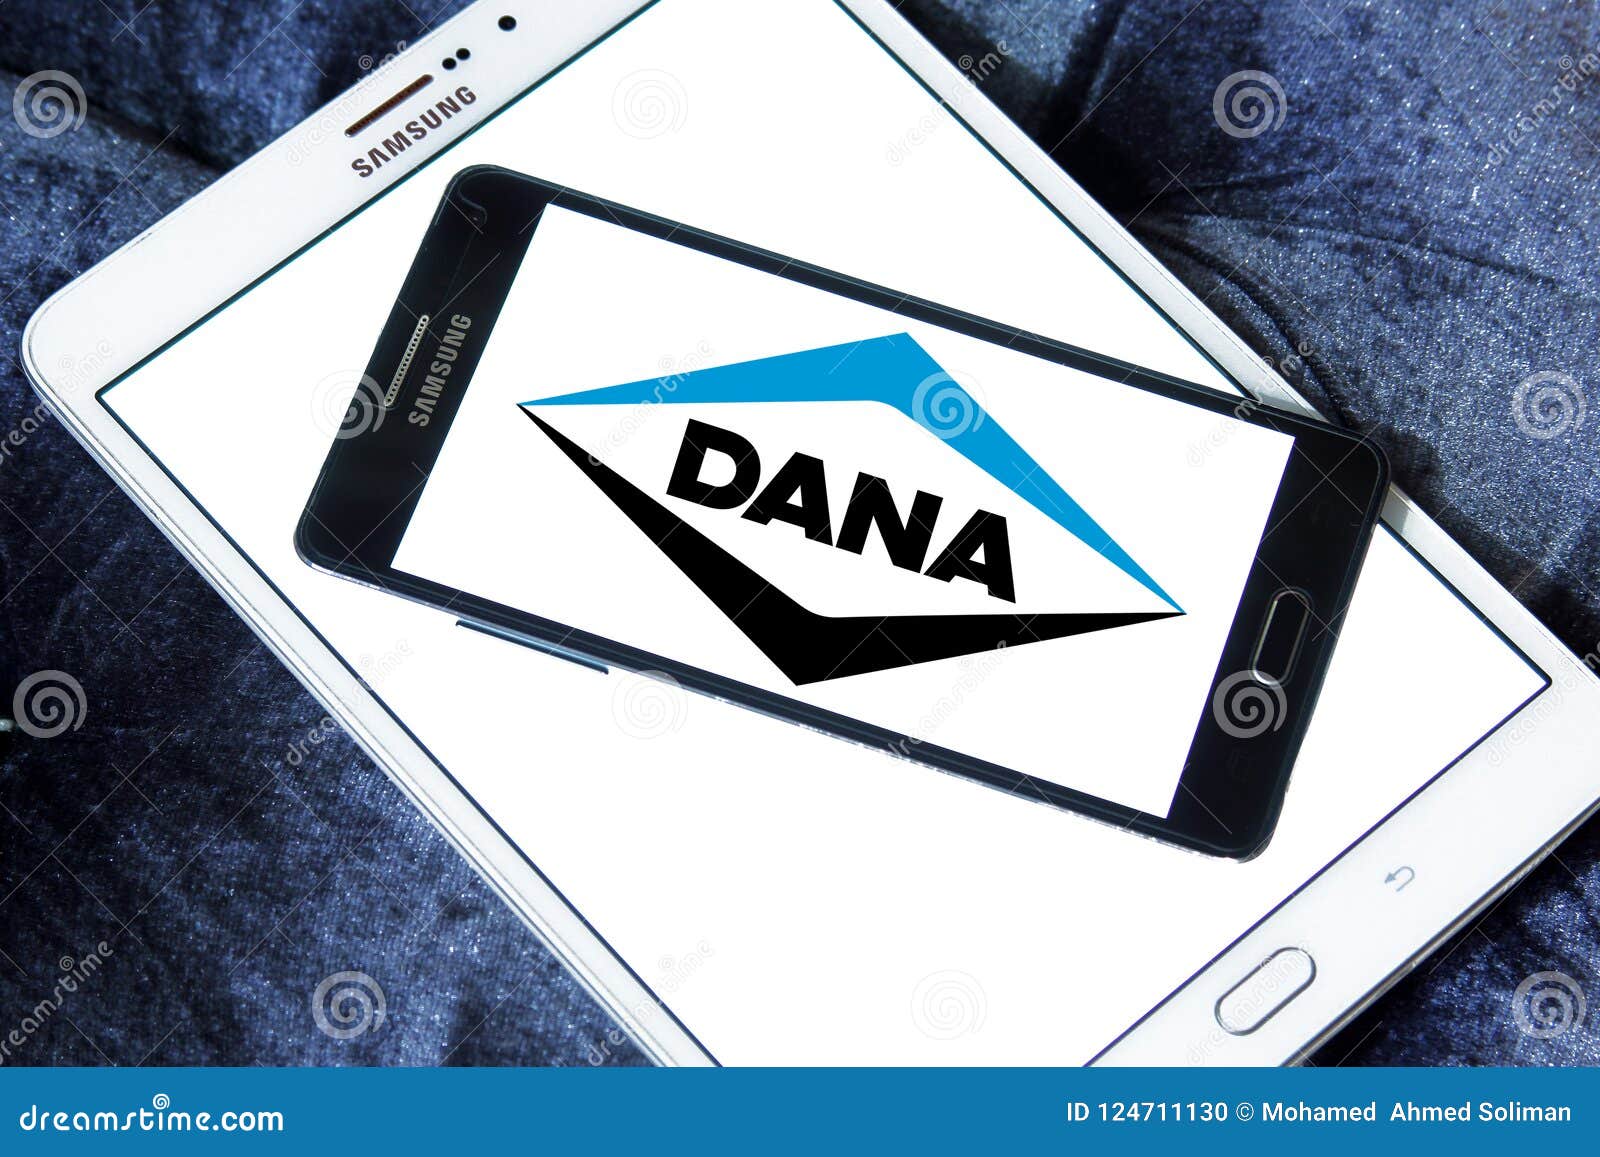 dana-company-logo-editorial-image-image-of-american-124711130